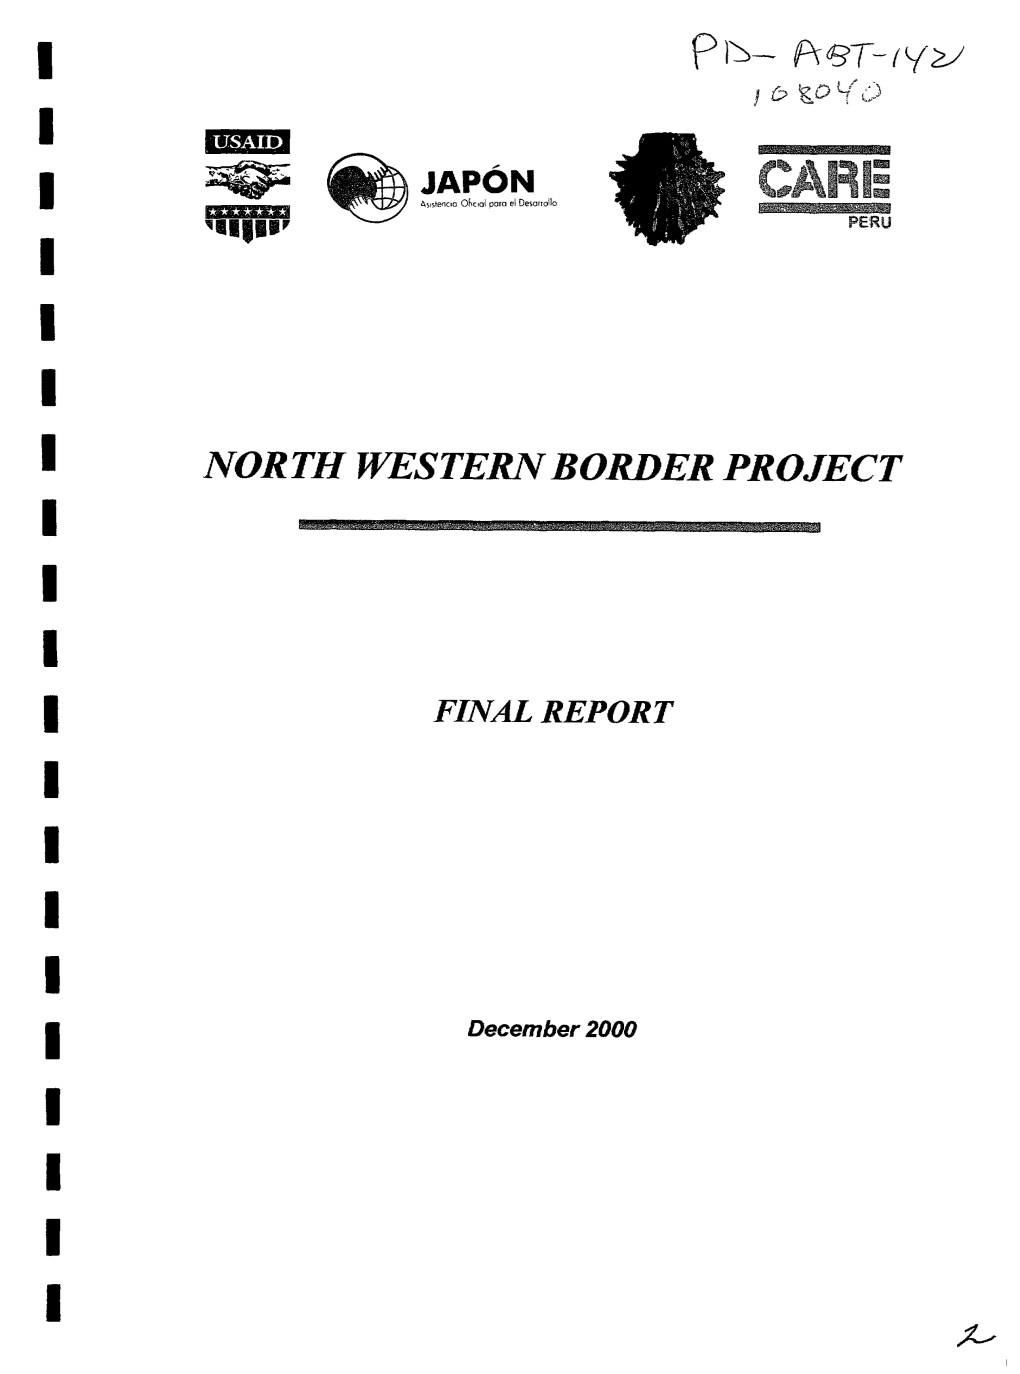 North Western Border Project